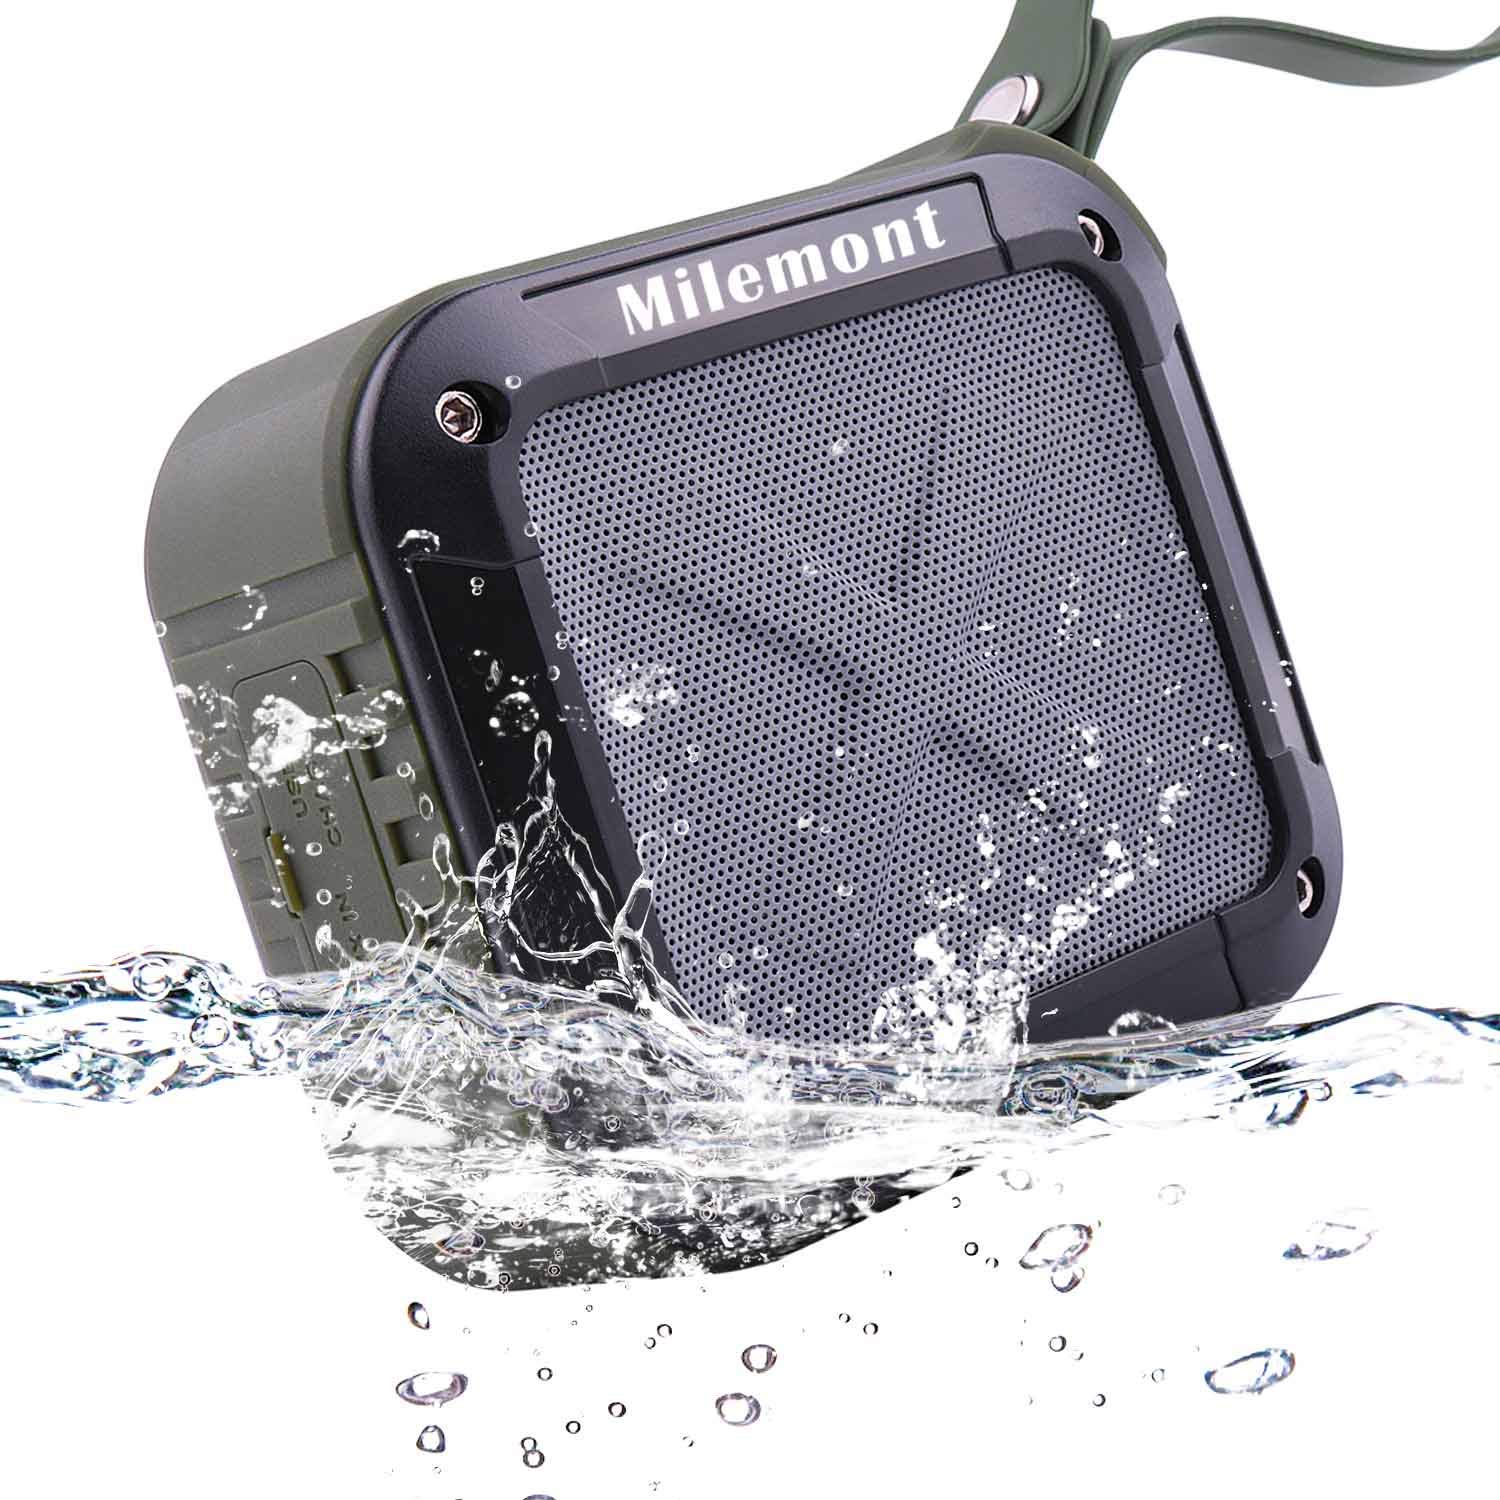 milemont shower speaker - best bluetooth speaker under 50 dollars